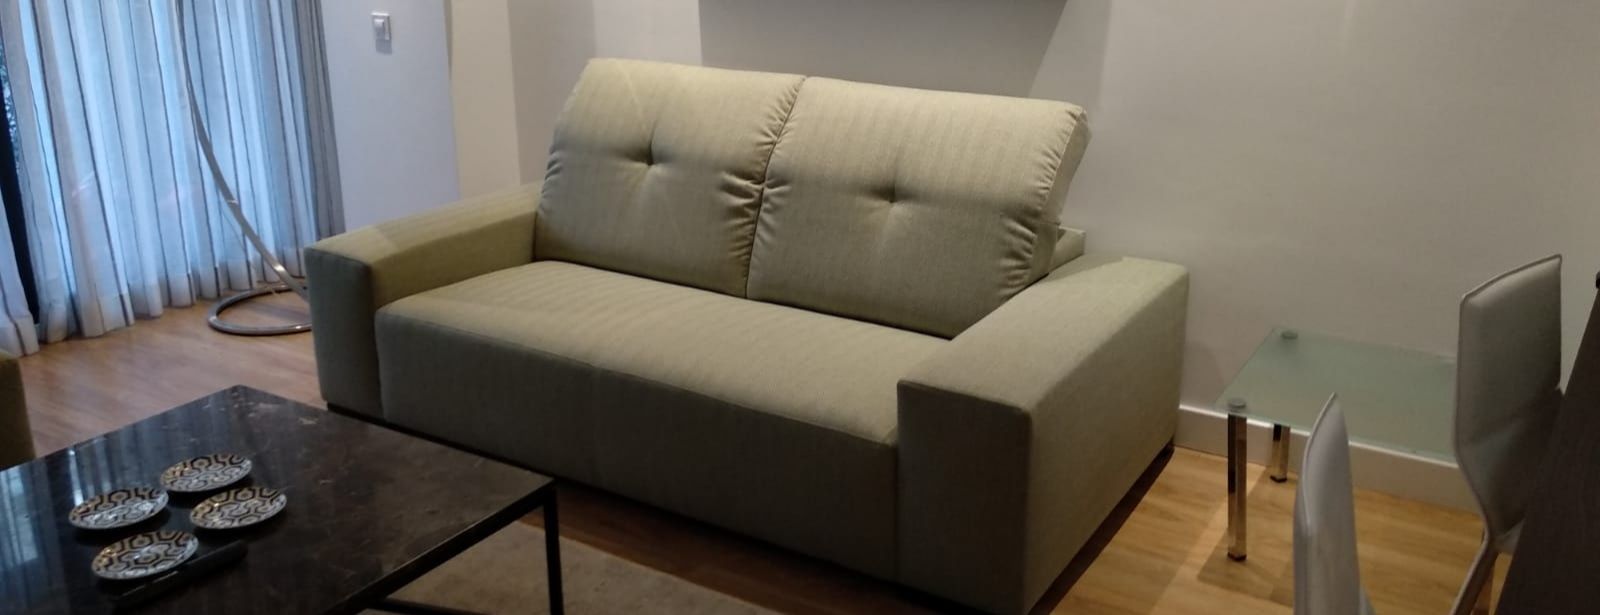 sofa-modelo-natuzzy.jpeg